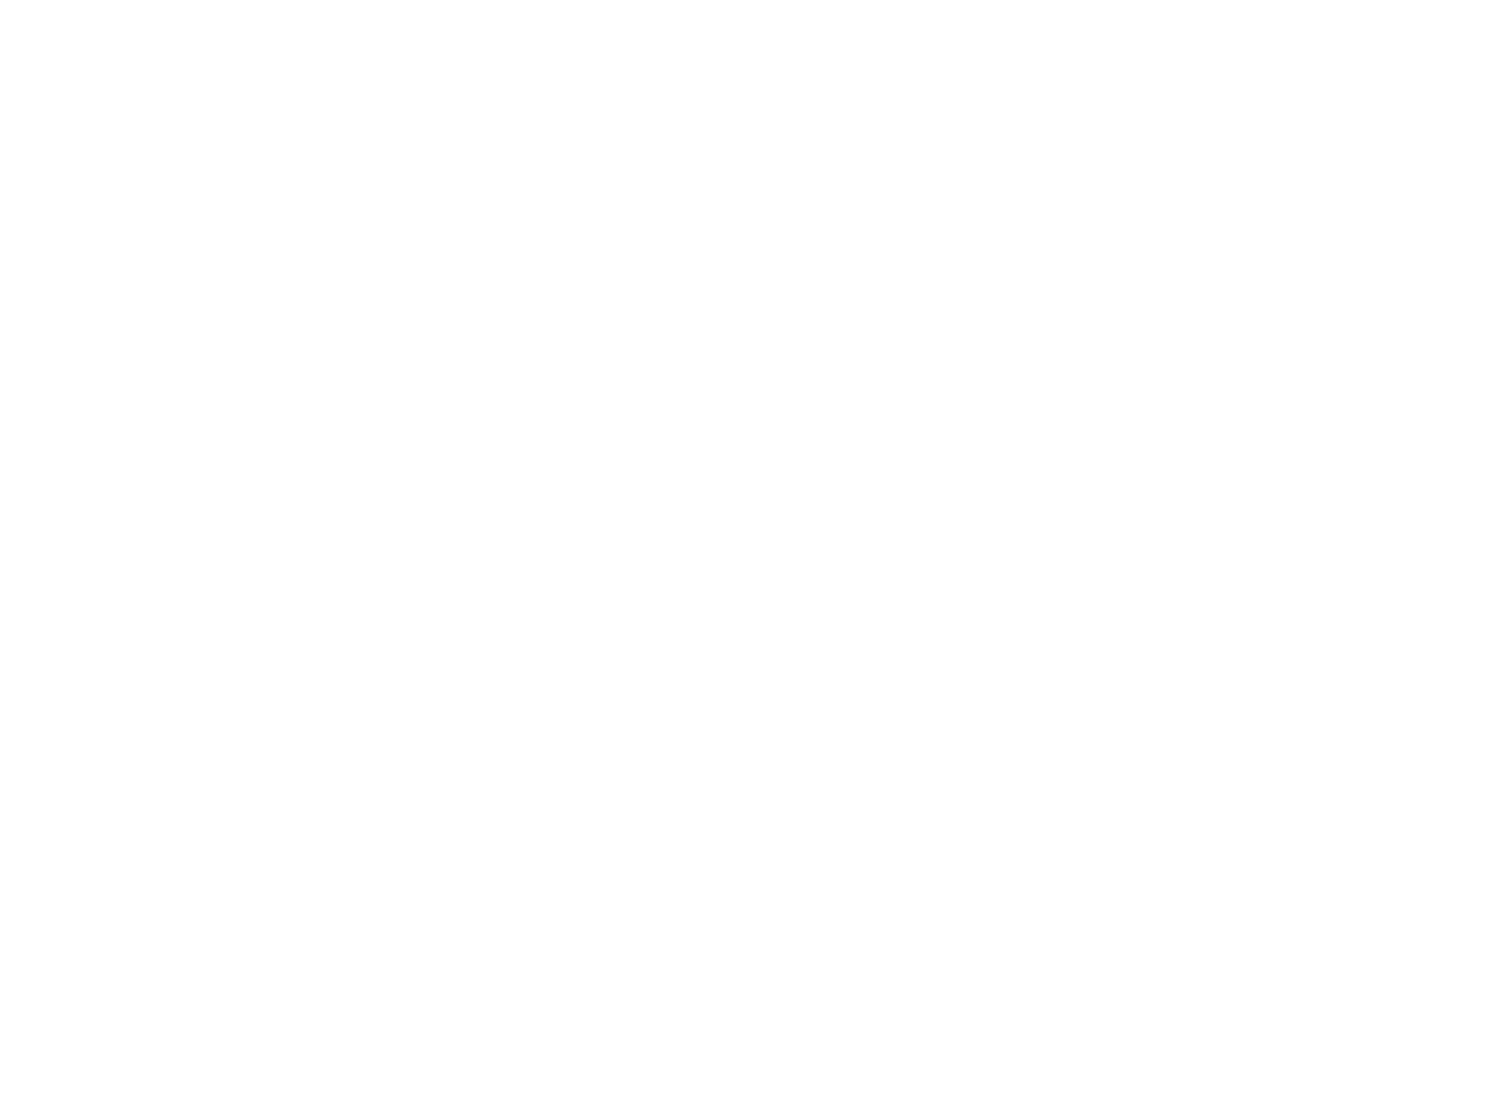 Stay Lucky Studios